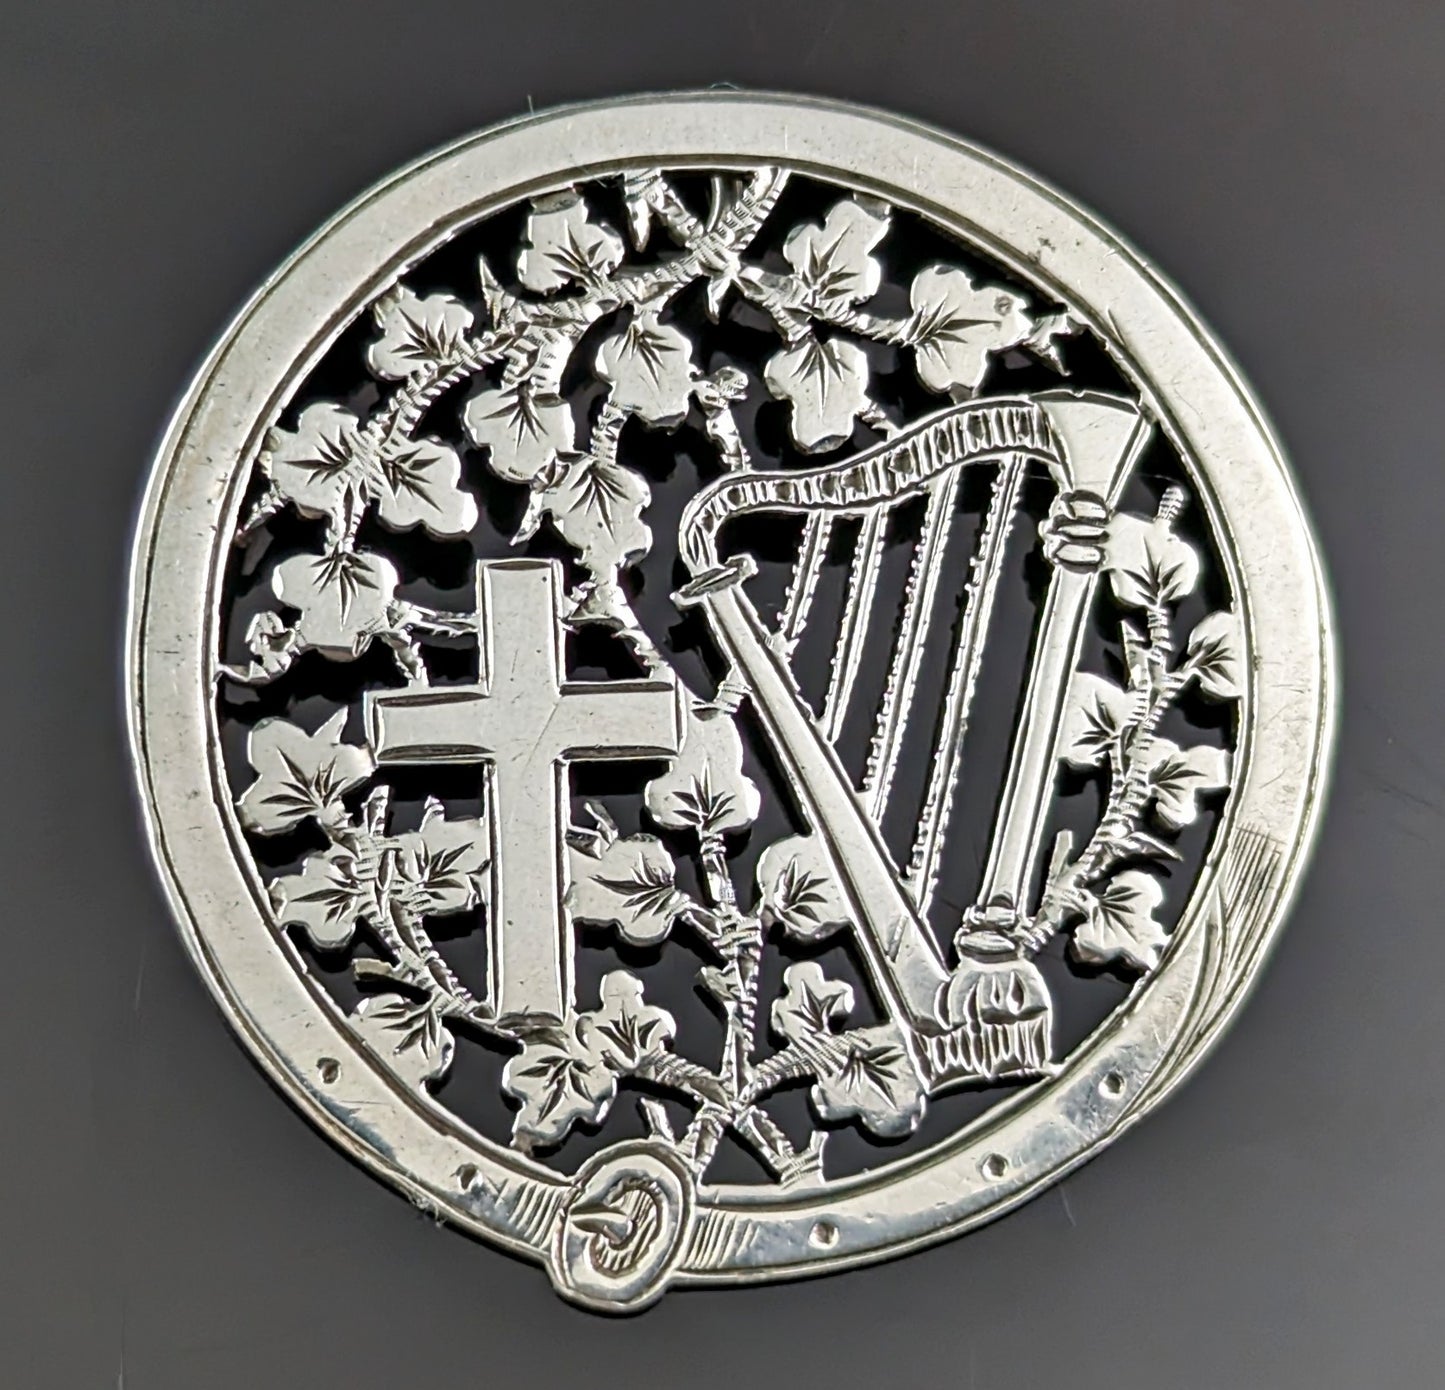 Antique Victorian silver pendant, Harp and Cross